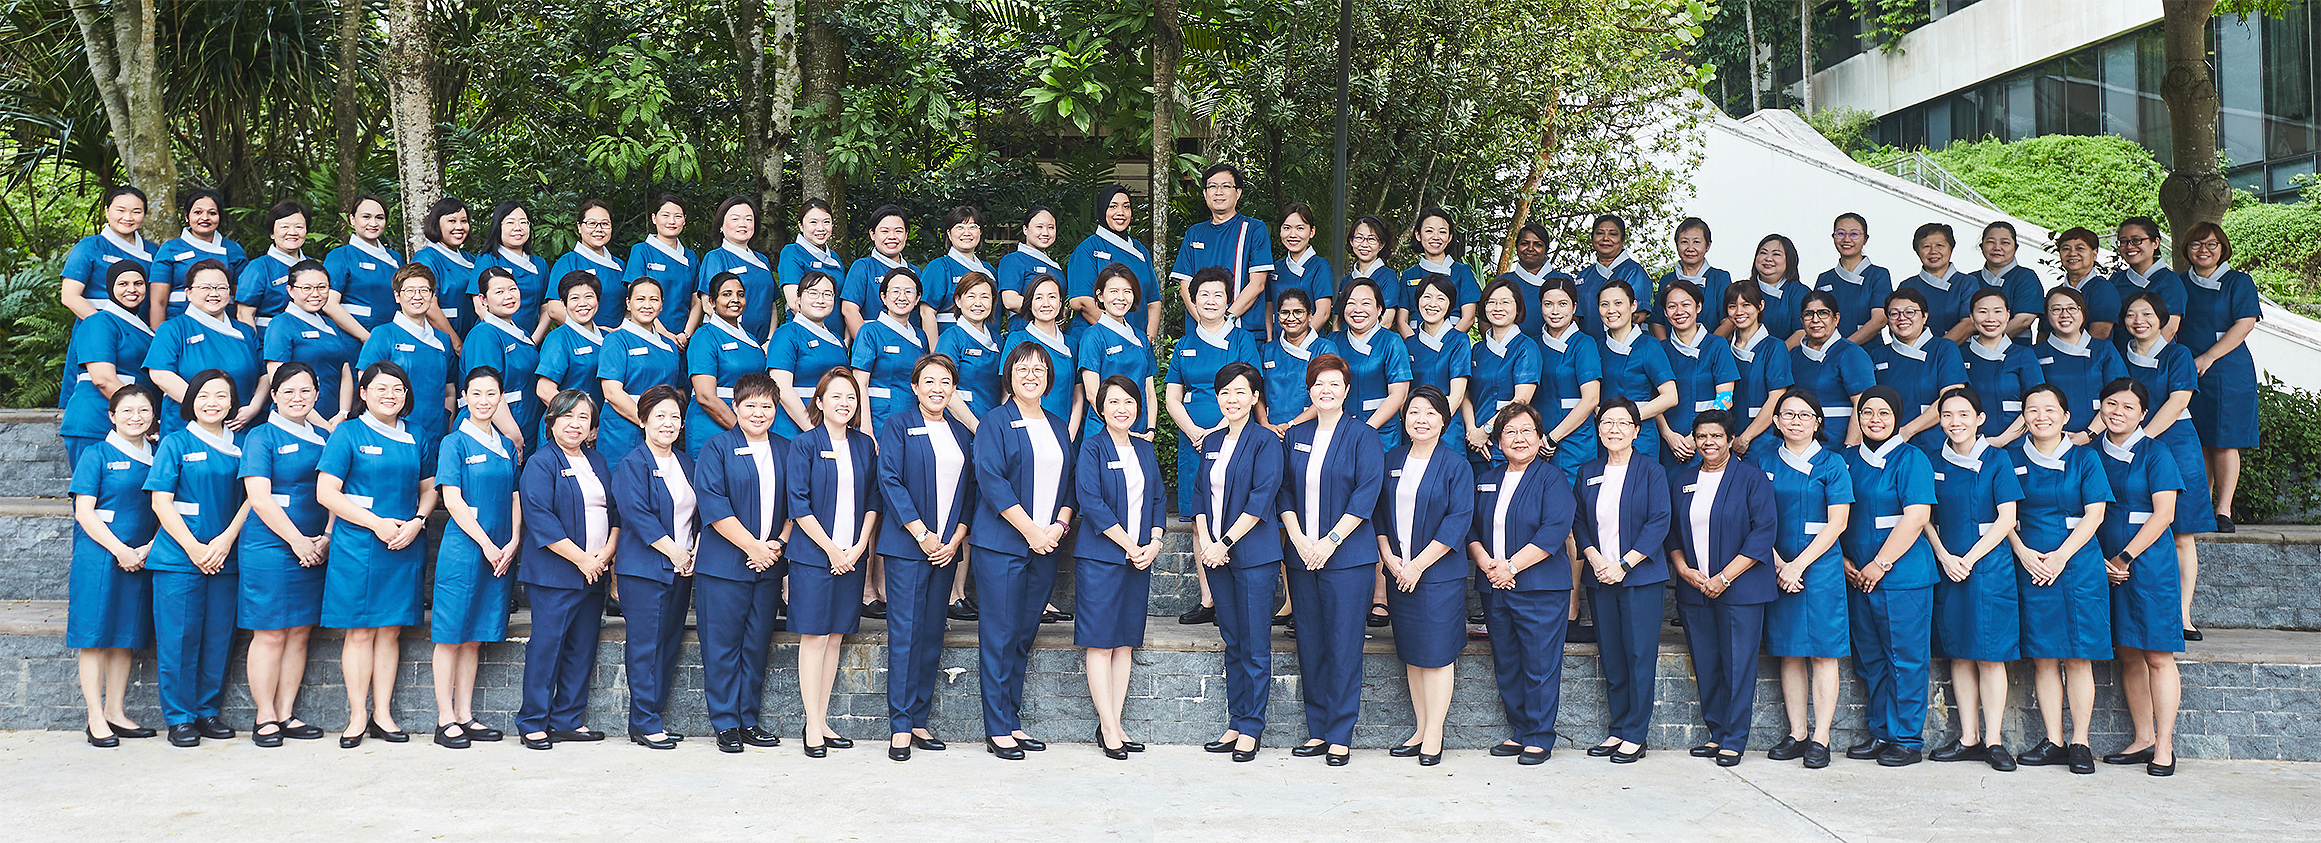 Group photo of senior nurses